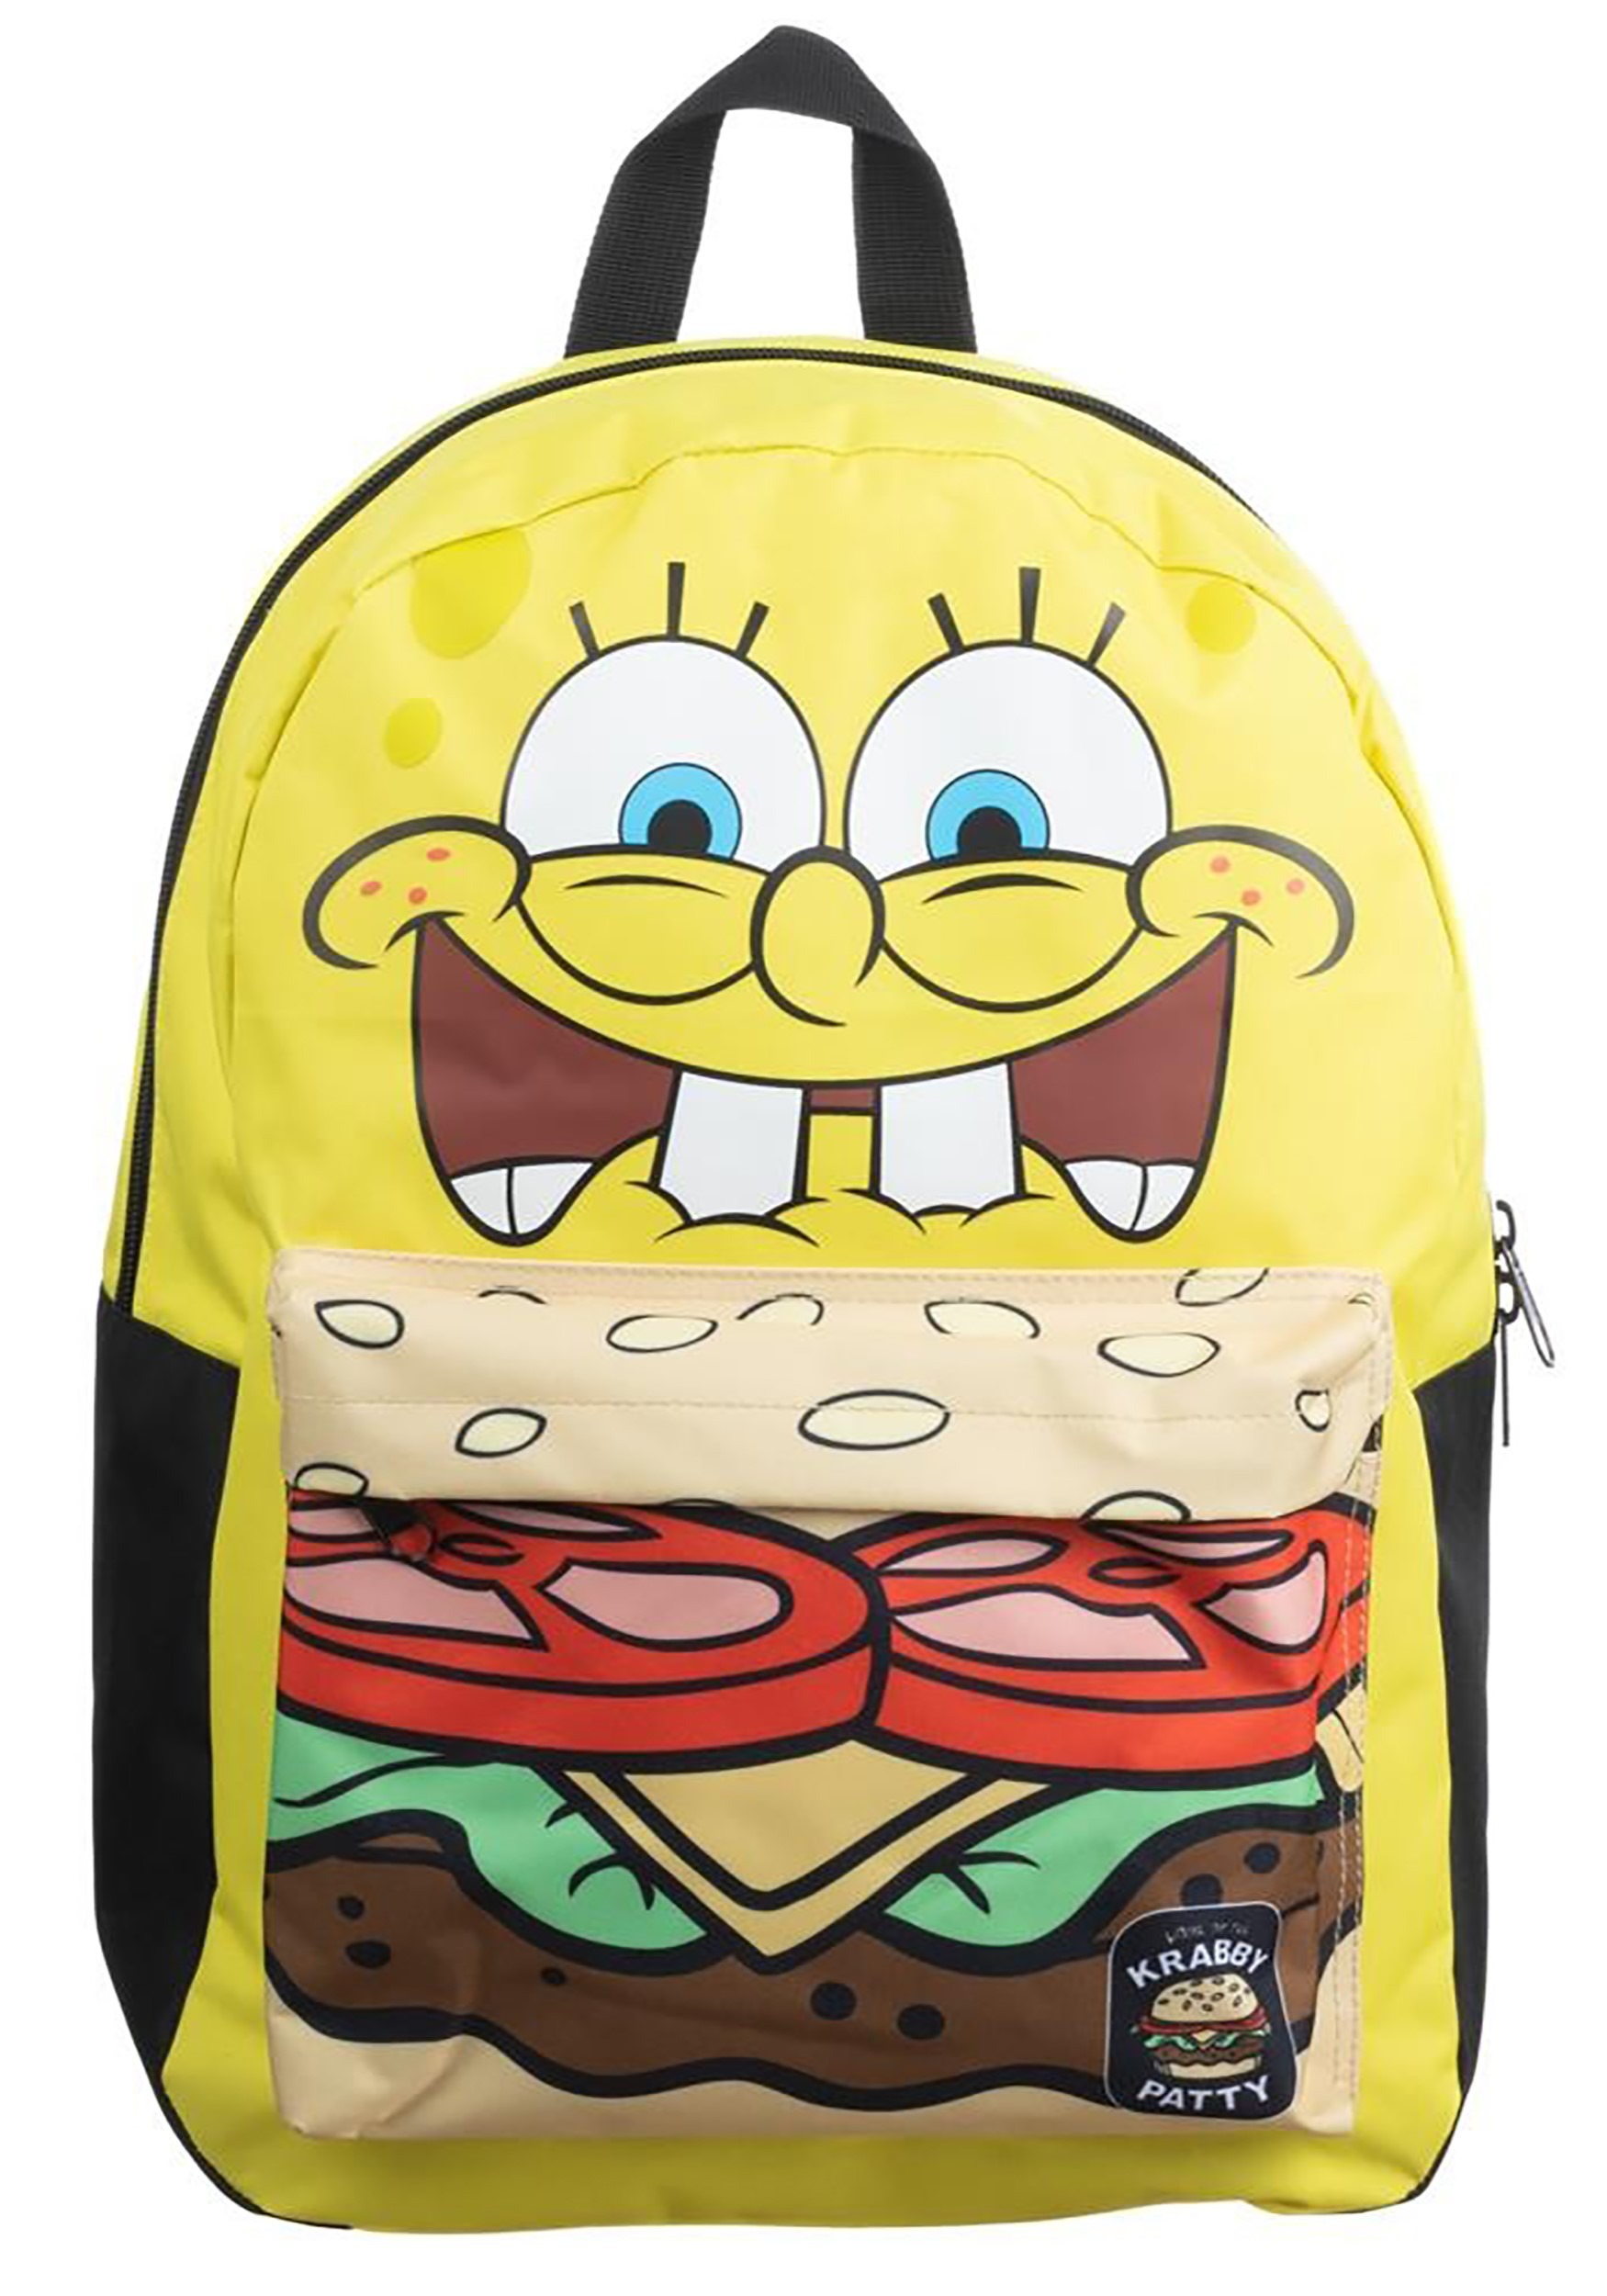 Spongebob pack. Backpack Spongebob. Sponge Bag. Spongebob худи. Buy Spongebob Hoodie Pink cheap.